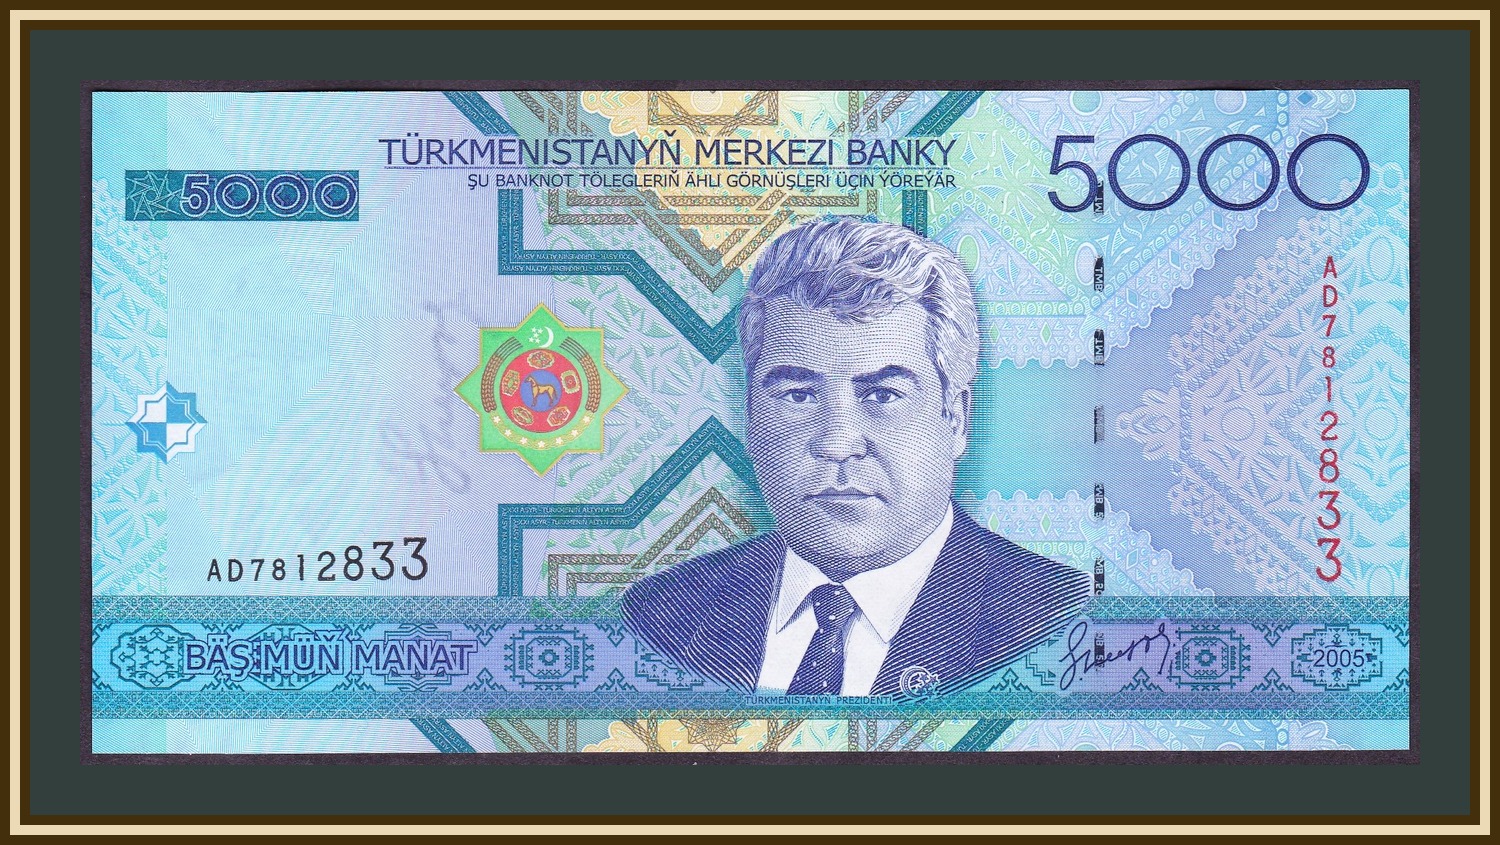 5000 Манат Туркменистан. Туркменистан 5000 манат 2005. 500 Манат Туркменистан. Туркменские манаты в пачках.